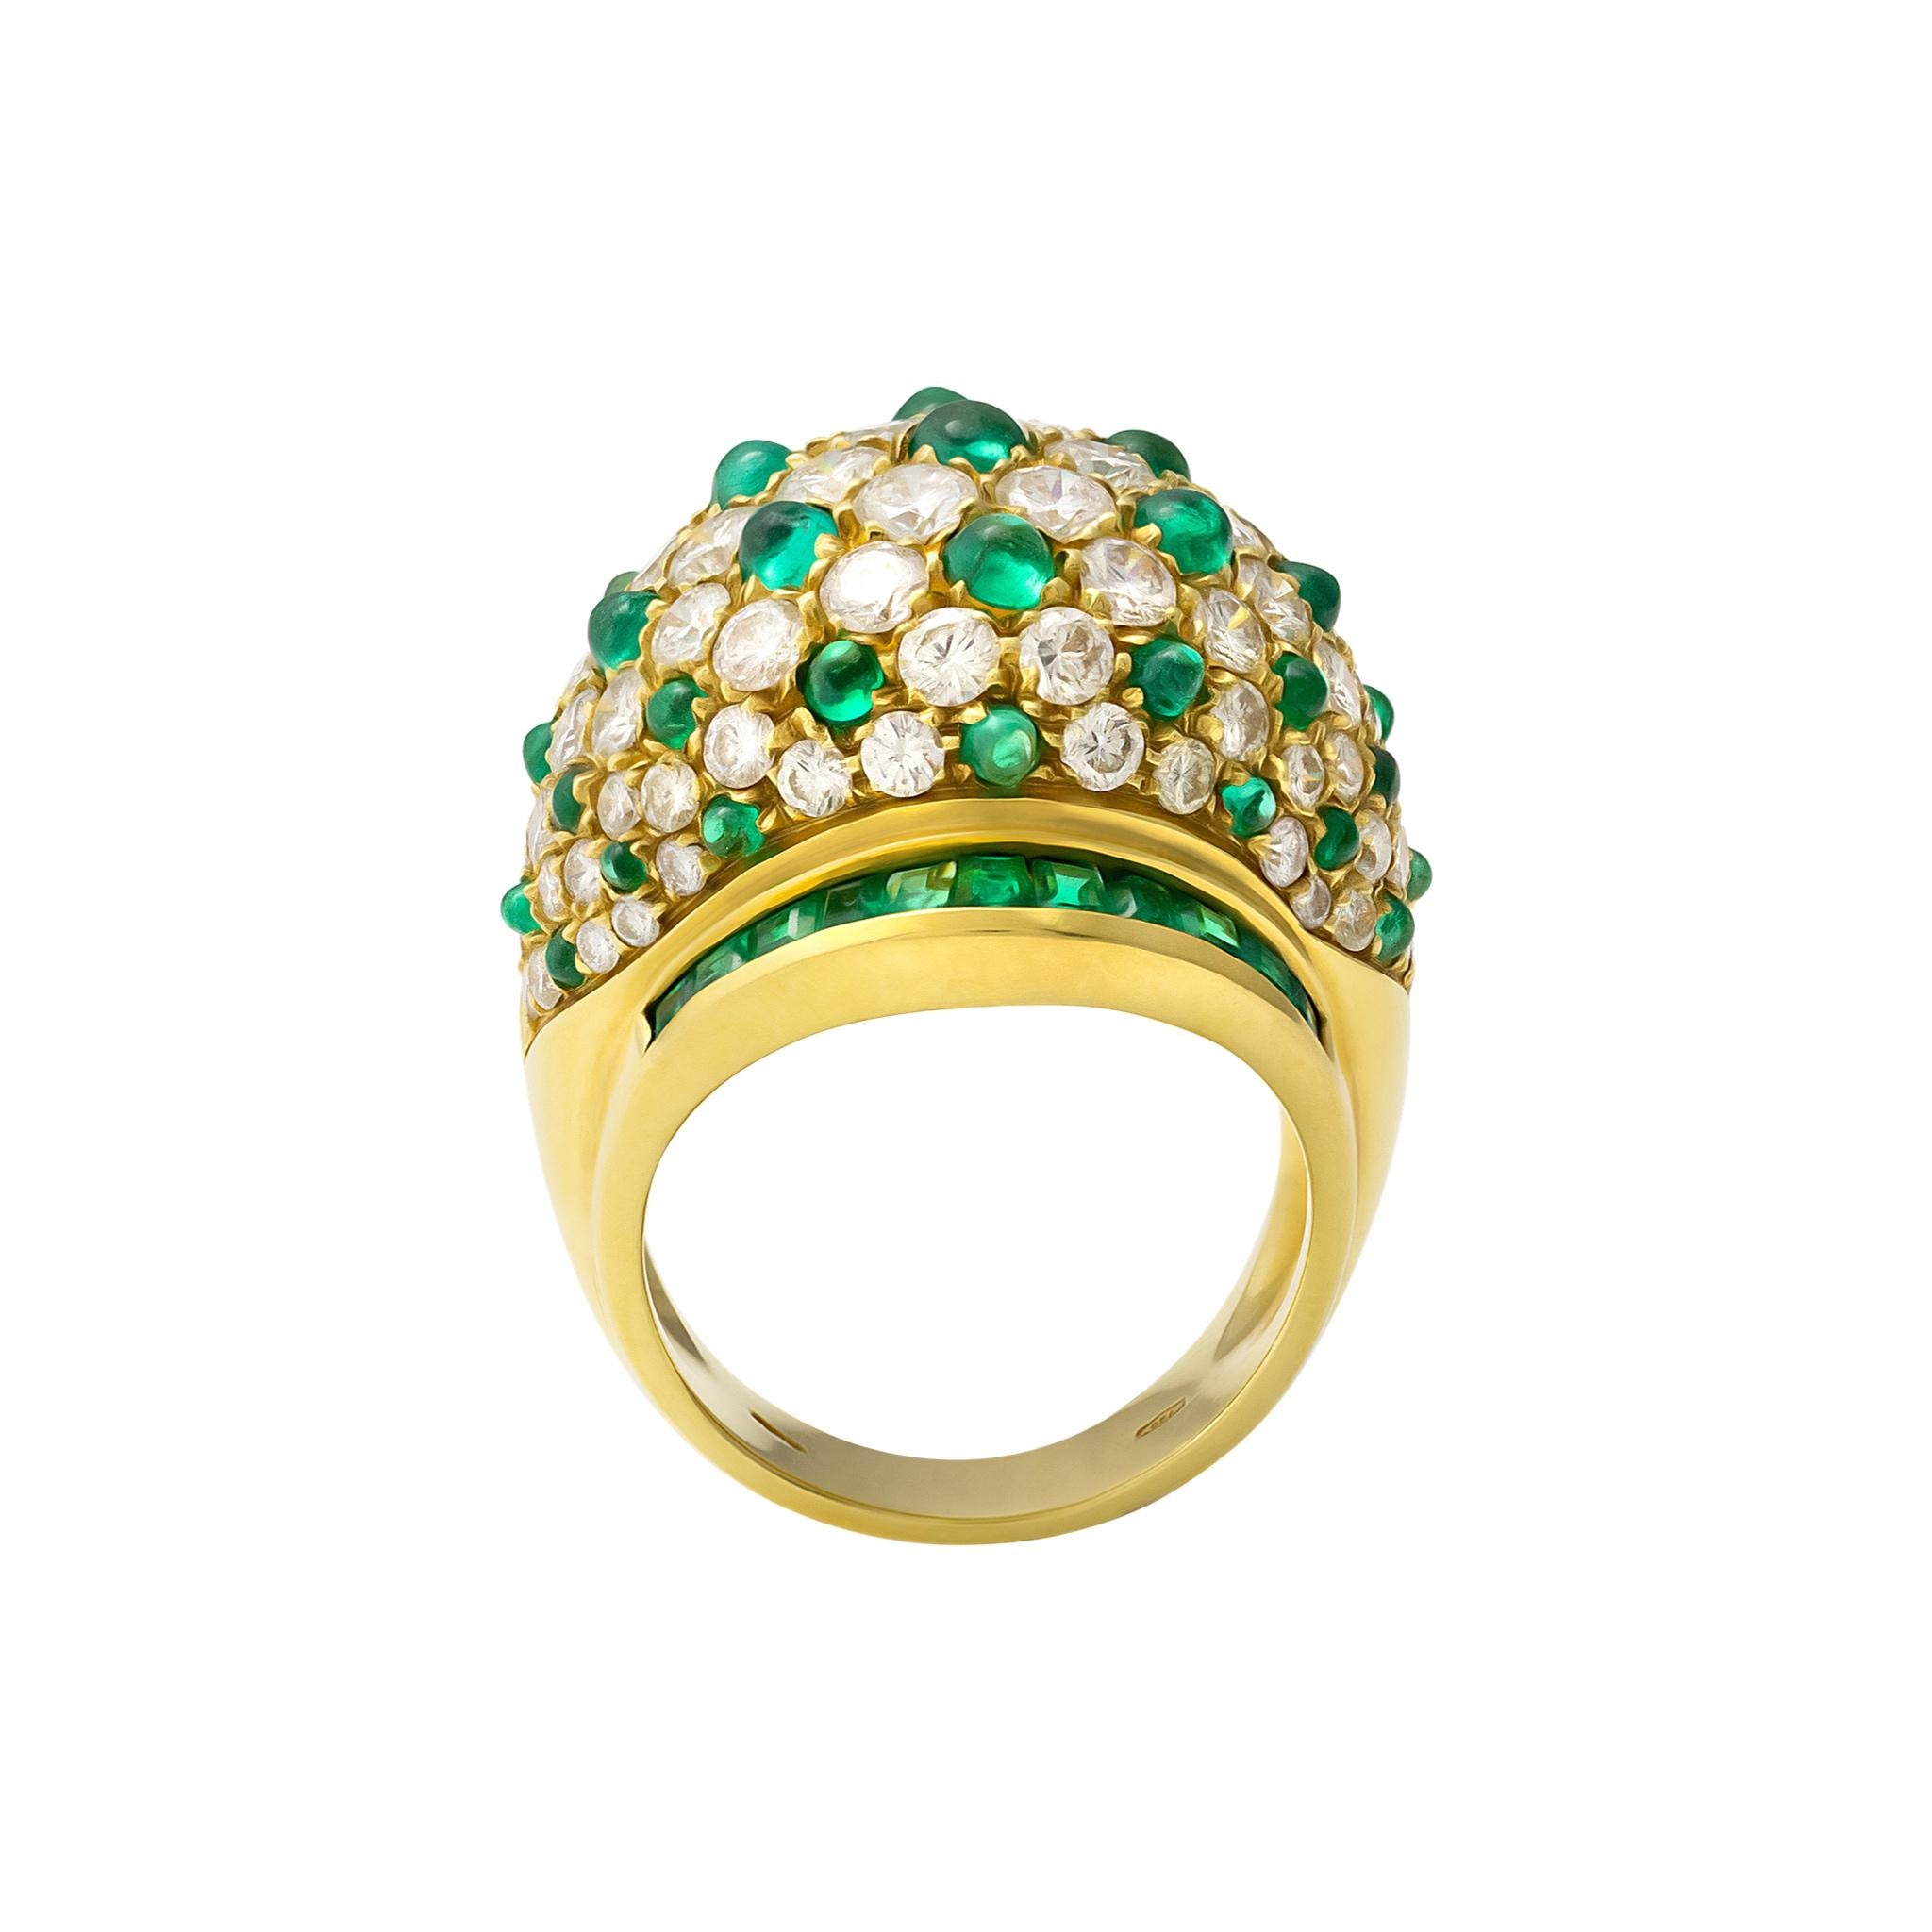 Stefan Hafner Ring
Diamond: 2.70ctw
Emerald: 3.20ctw
Size: 7
Italian made
SKU: BLU01115
Price retail: $26,650.00